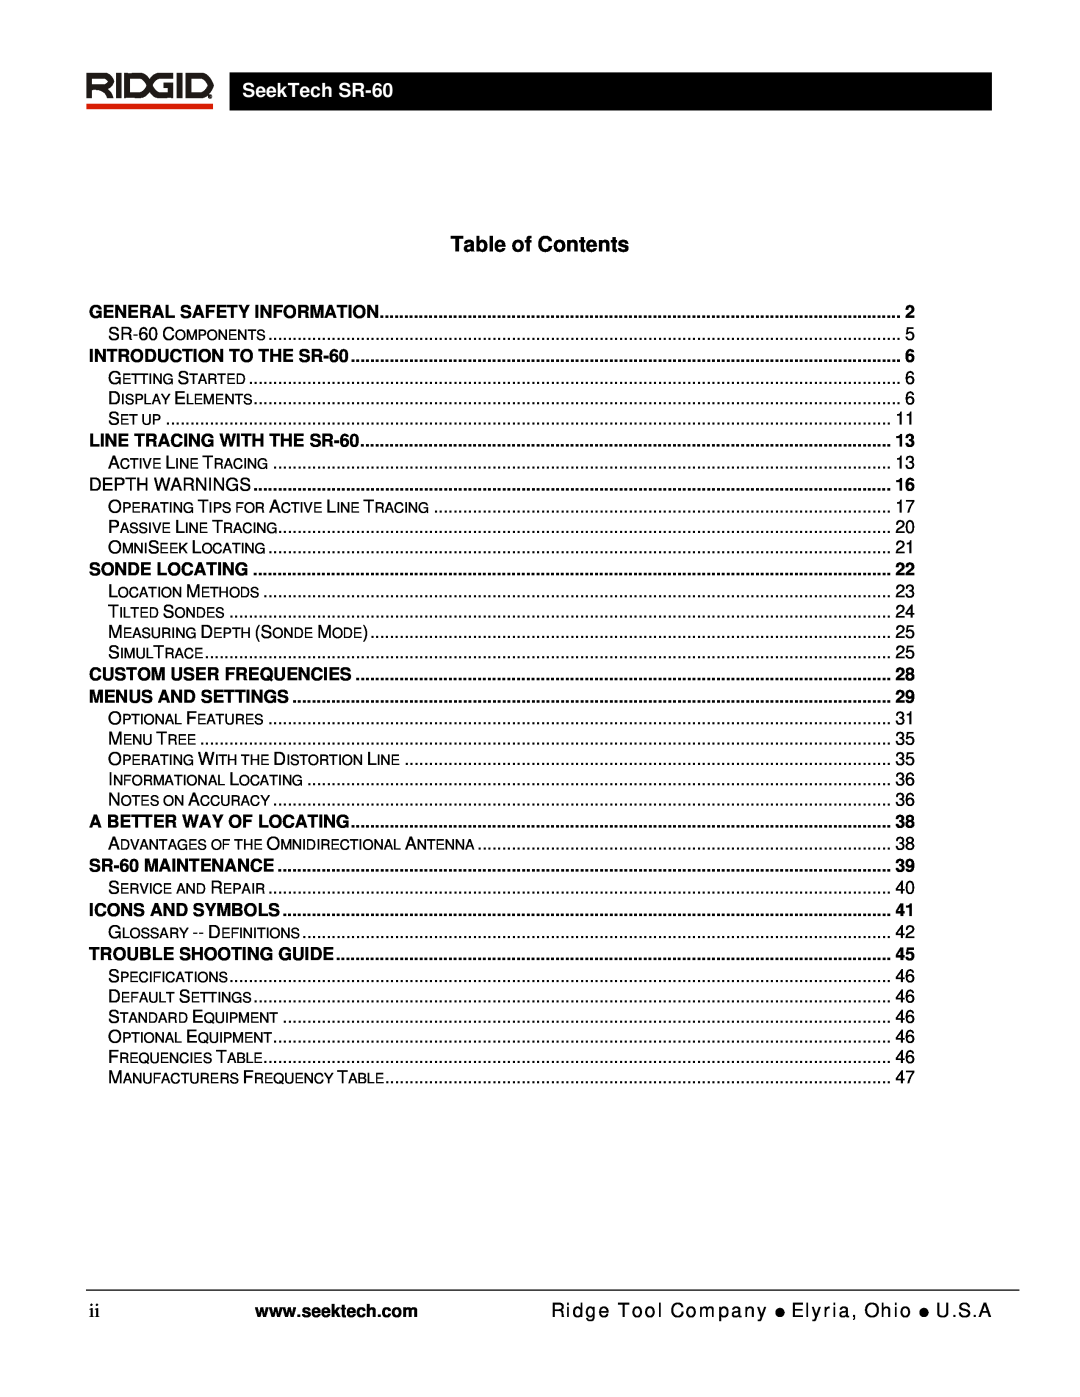 RIDGID manual Table of Contents, SeekTech SR-60 